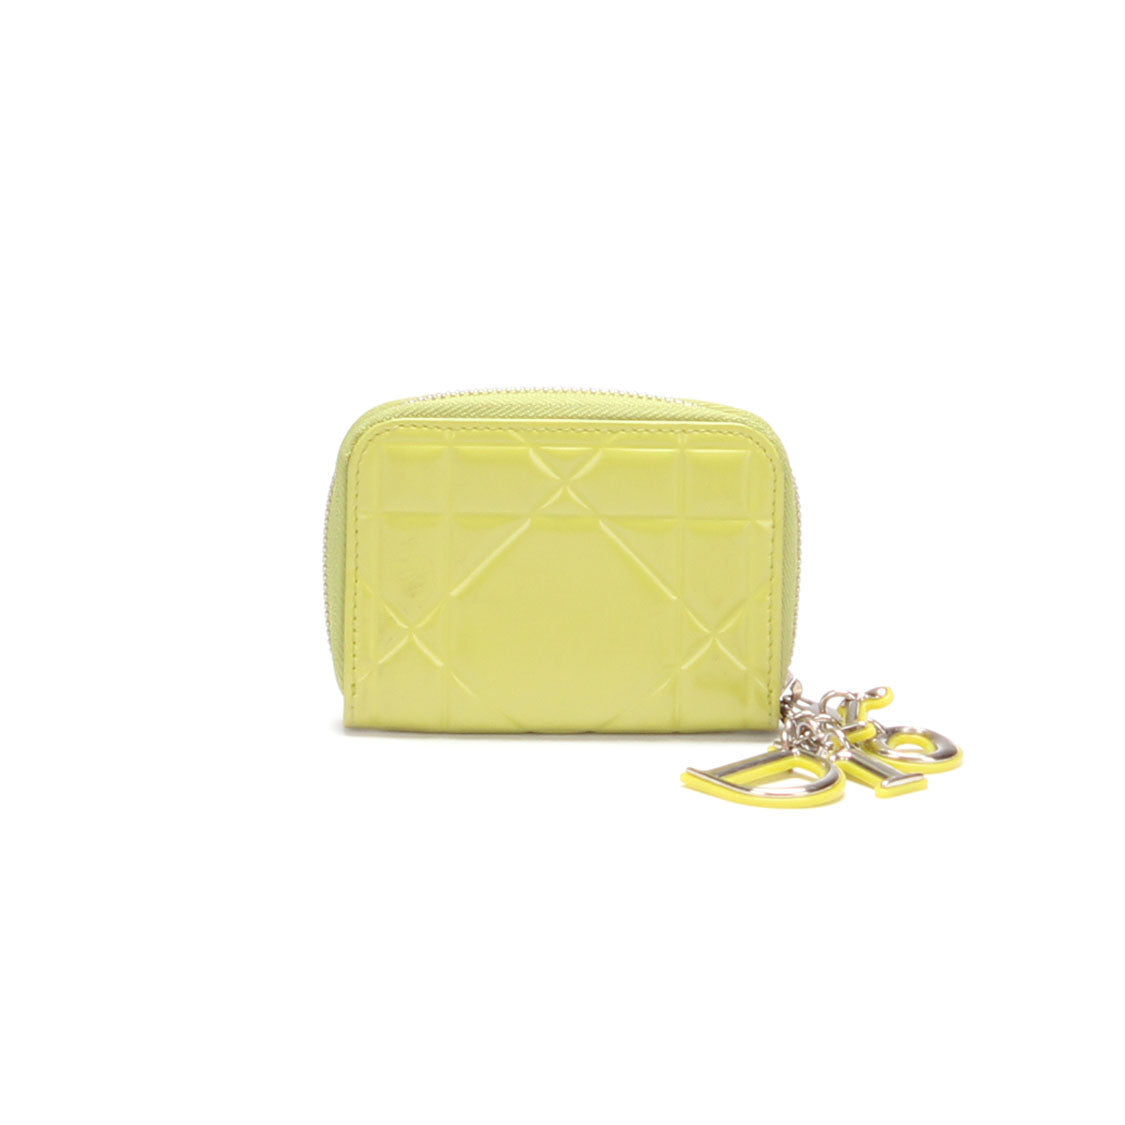 Lady Dior Compact Wallet